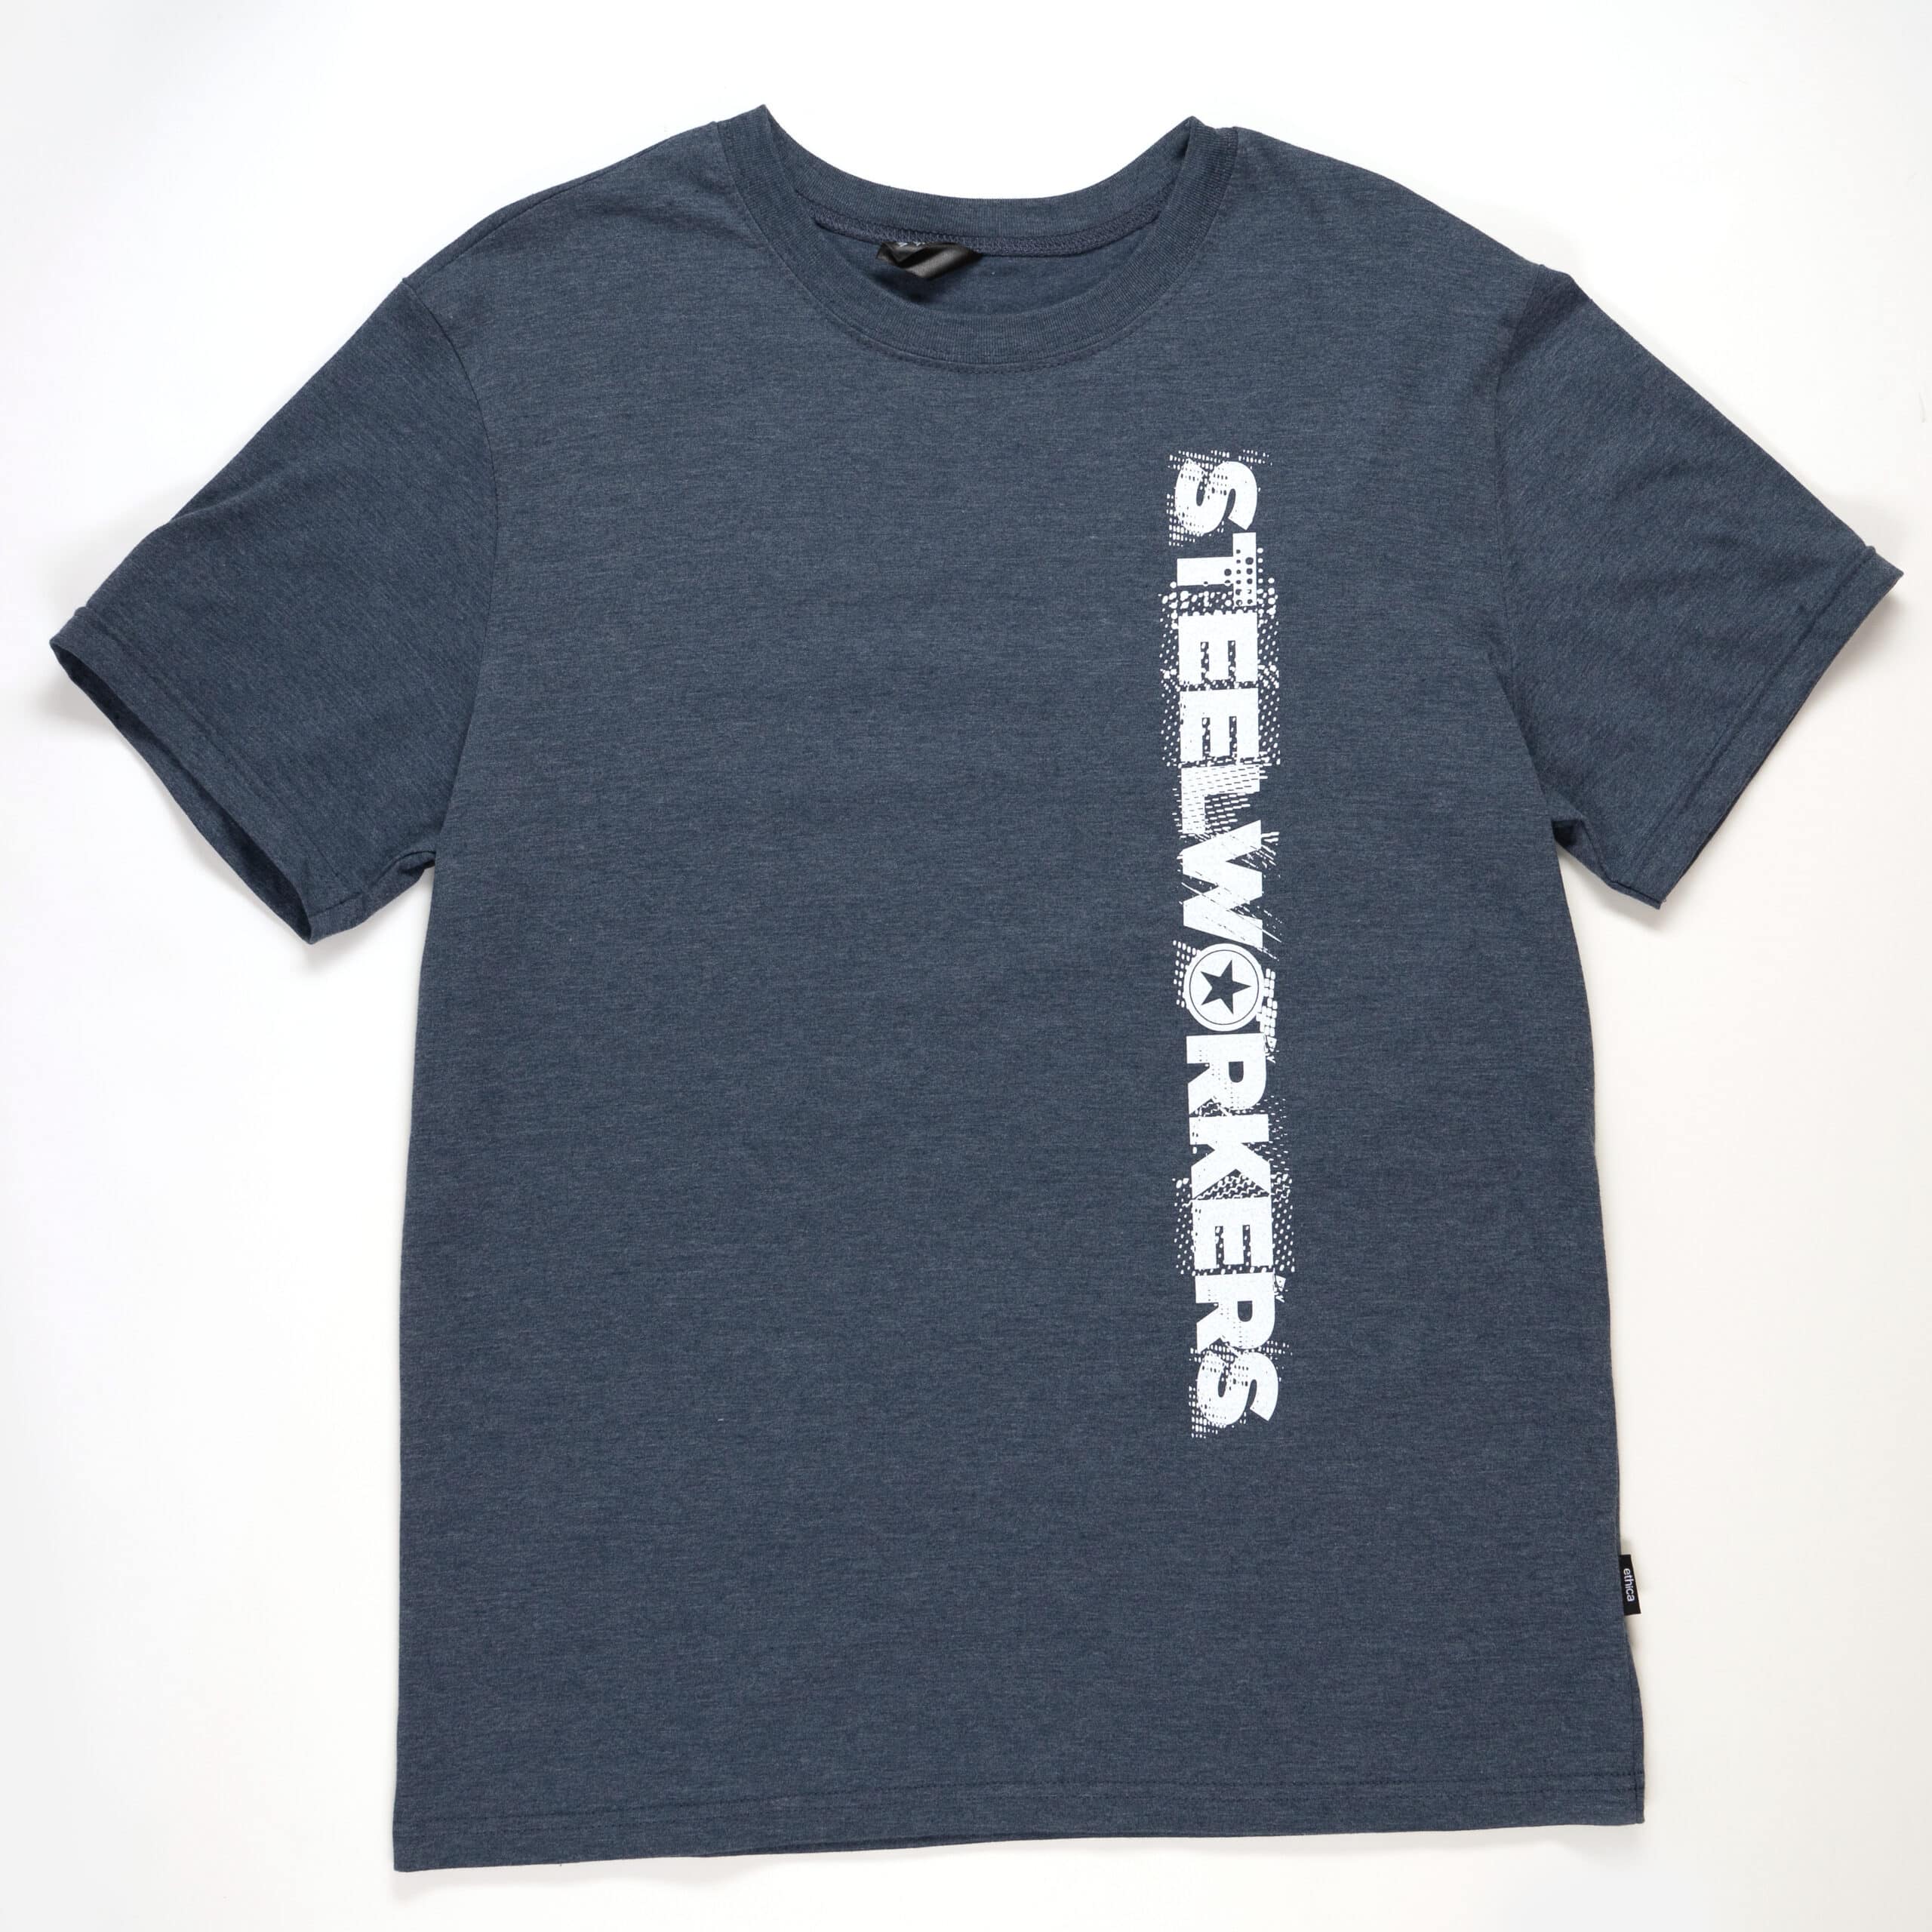 USW Navy US SW T Shirt - USW Steelworker Store